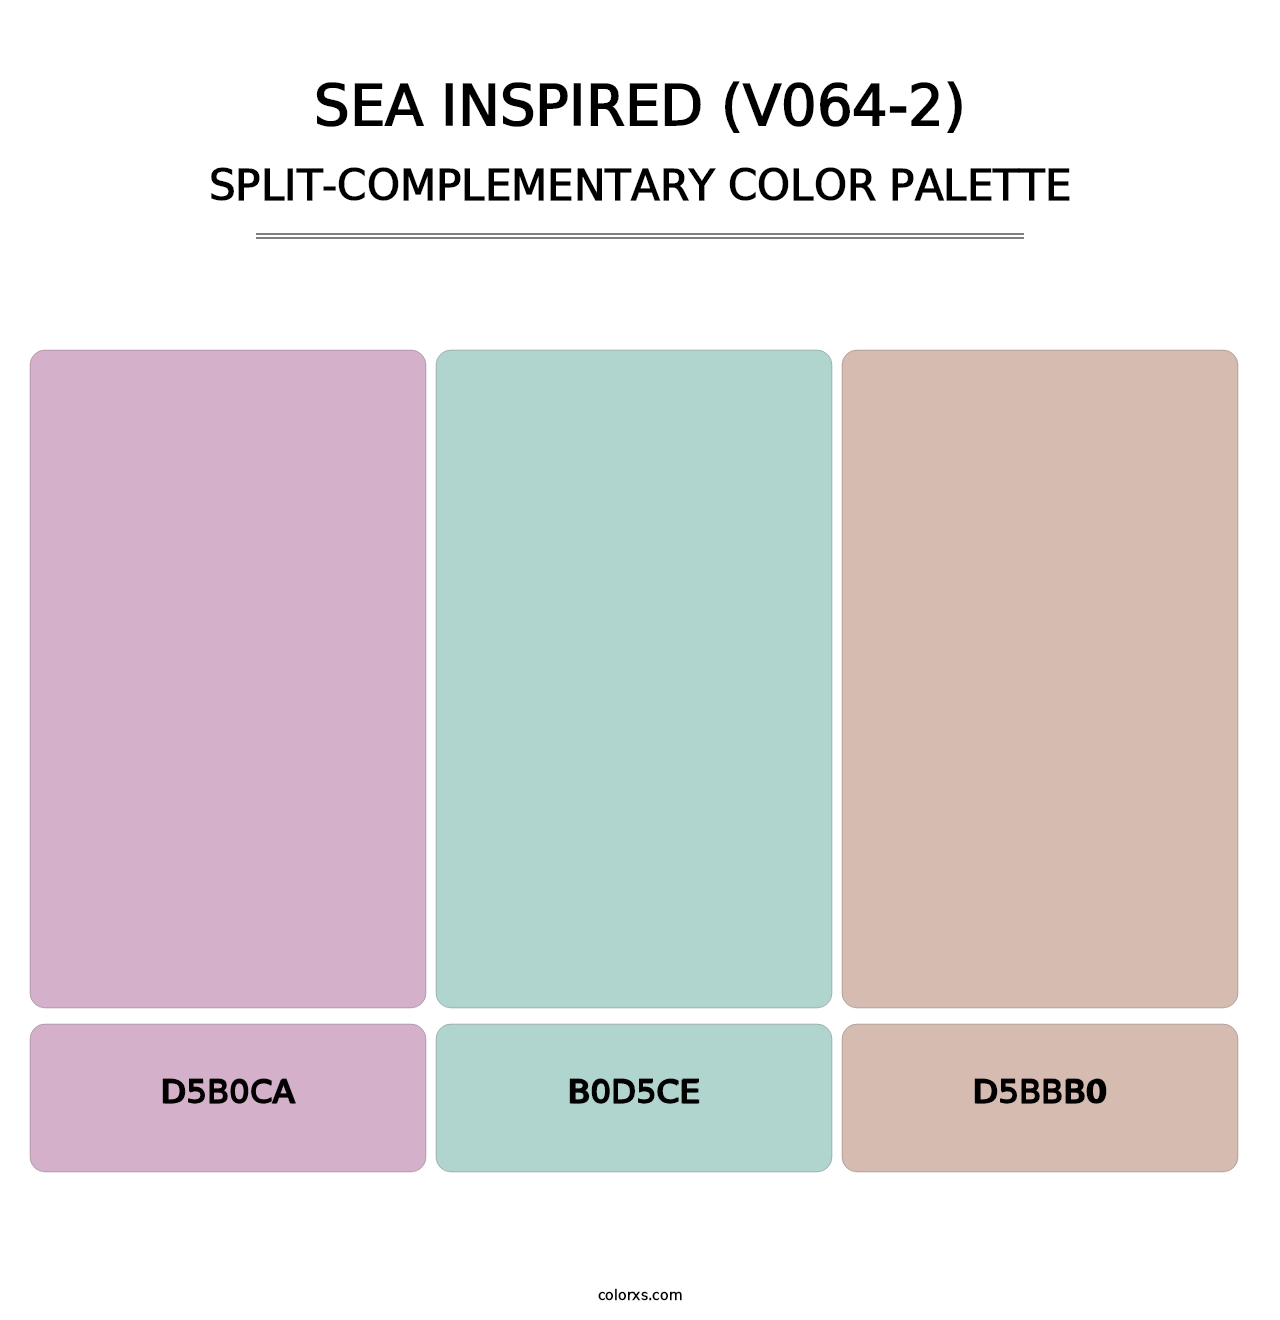 Sea Inspired (V064-2) - Split-Complementary Color Palette